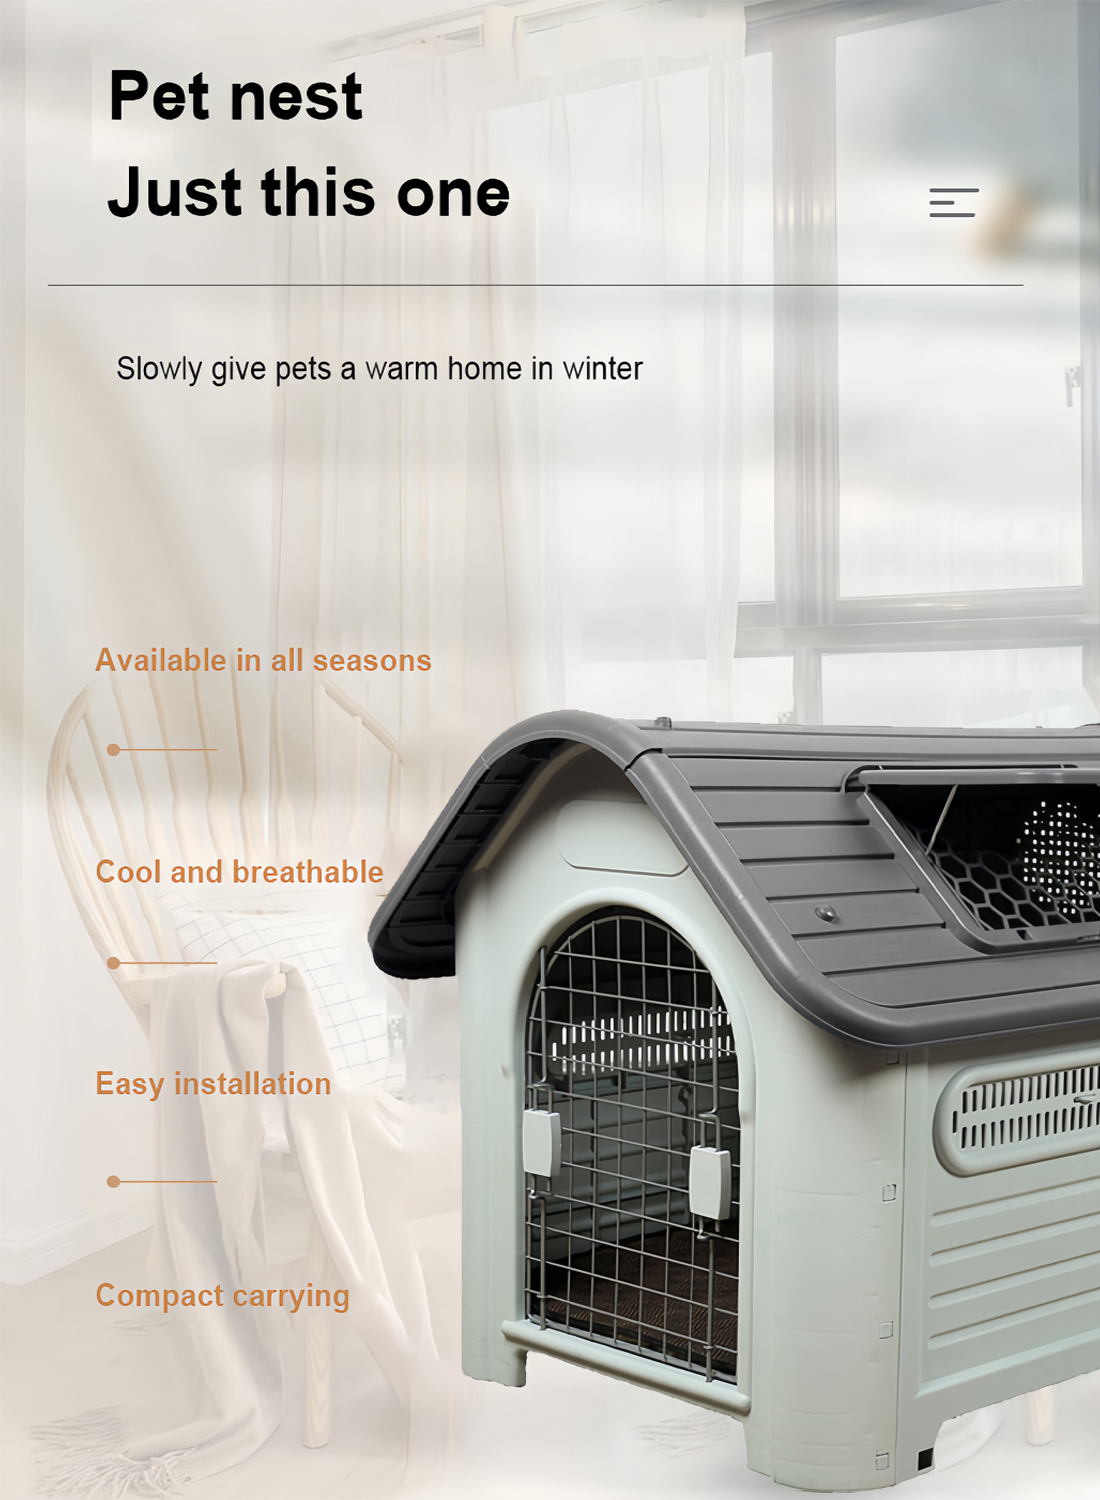 Rainproof Dog Kennel Large ,4 Seasons Universal, Dual Door, Washable,Ventilated Design, Leak-proof Base, Outdoor/Indoor Use,87x72x75cm